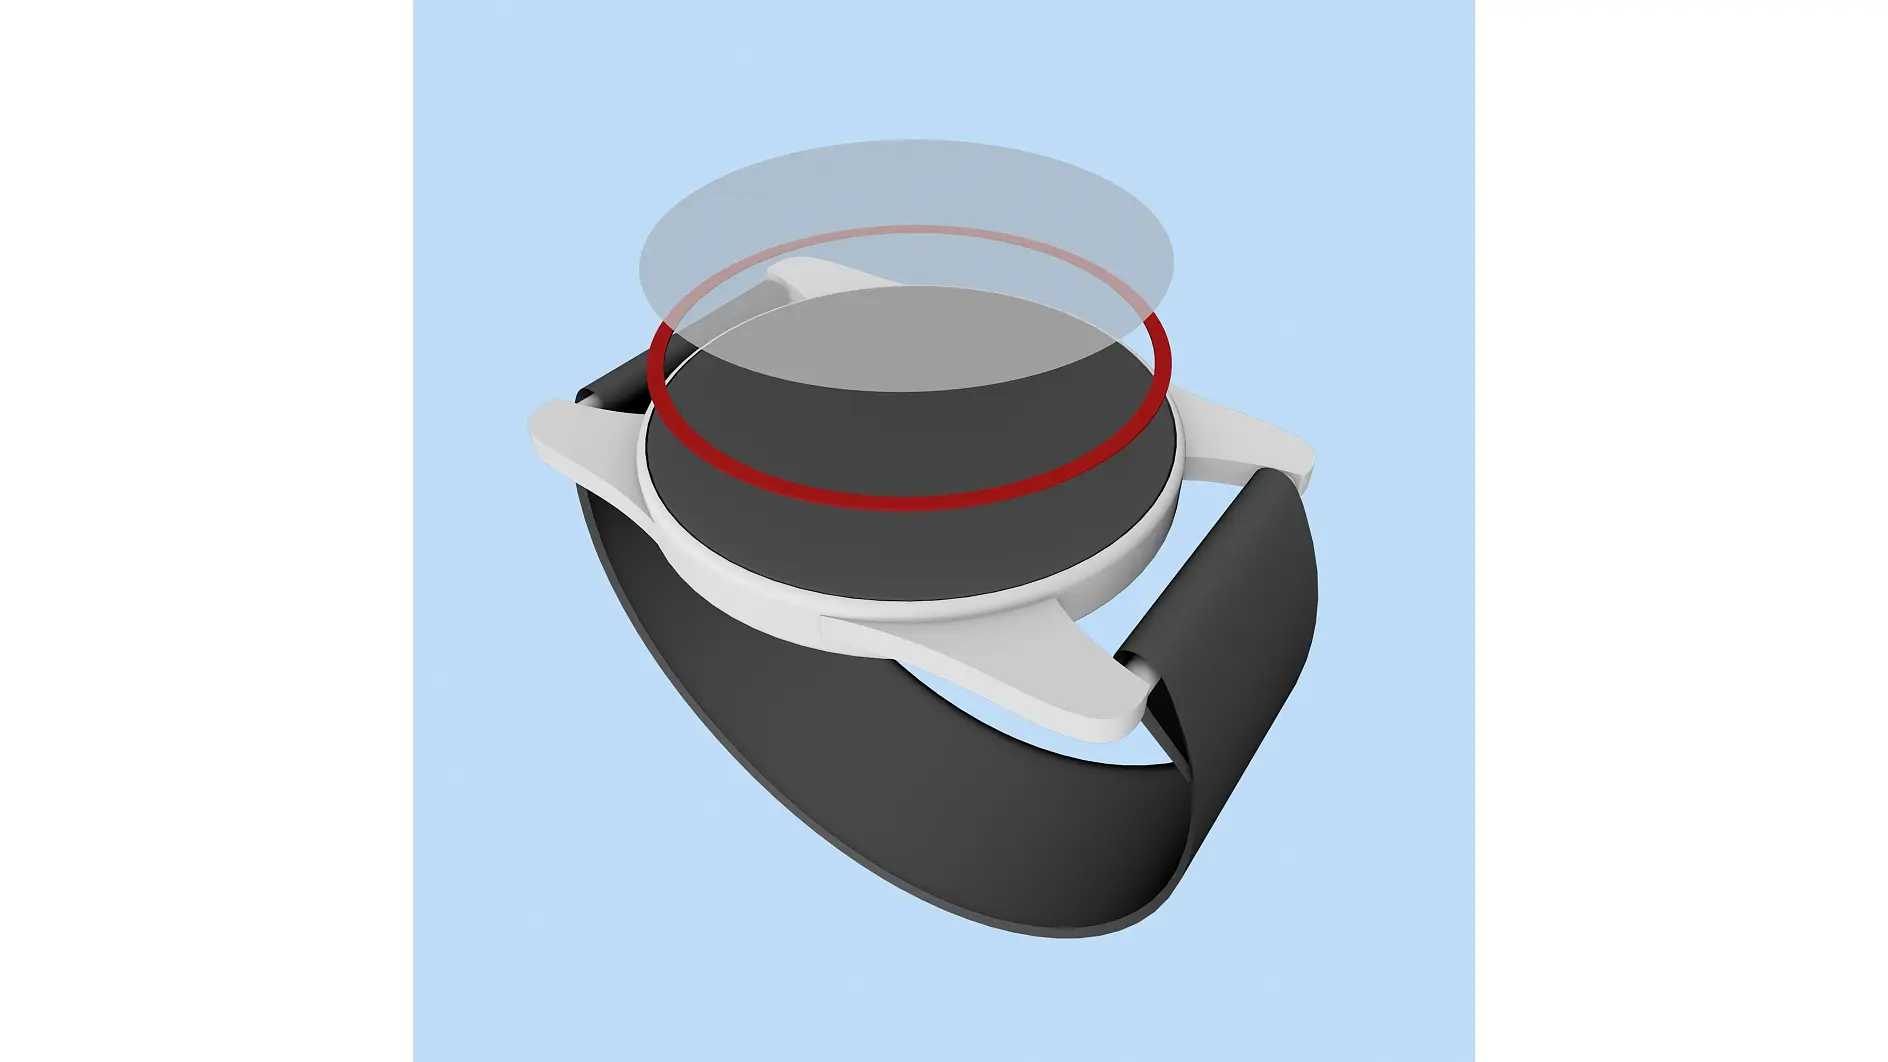 tesa-electronics-smartwatch-display-lens-mounting-001a-illustration